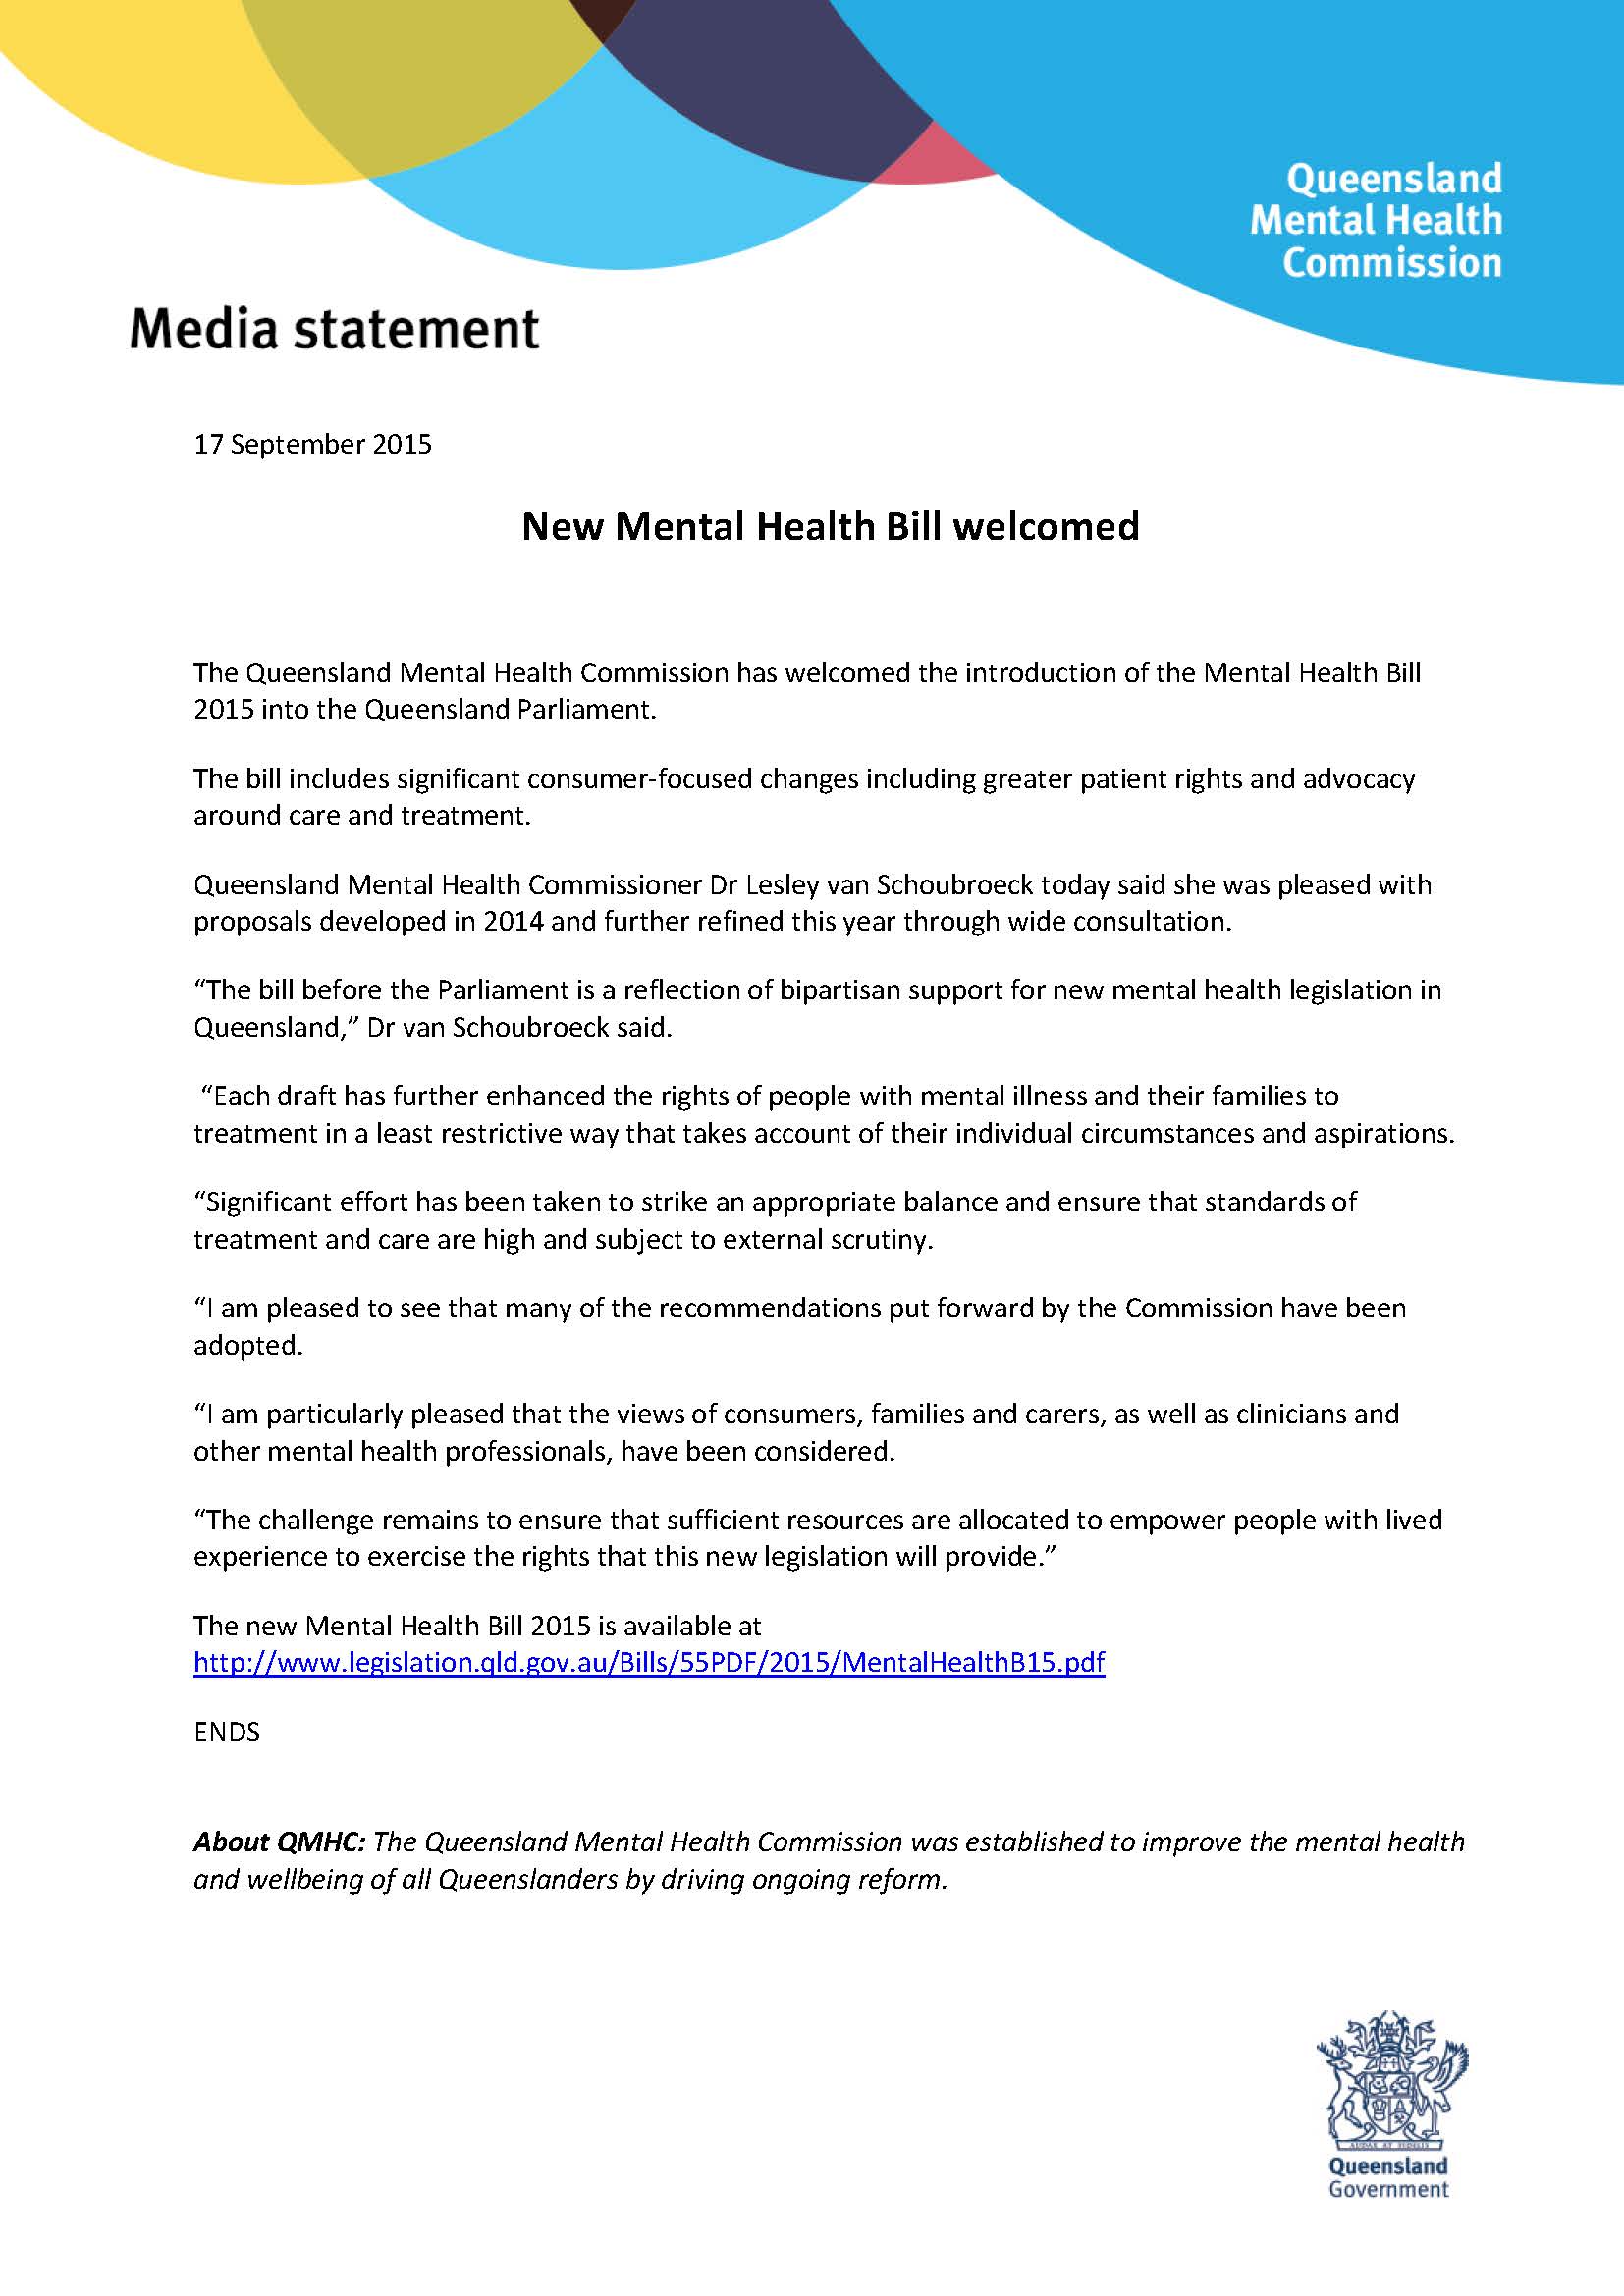 New Mental Health Bill Queensland Mental Health Commission